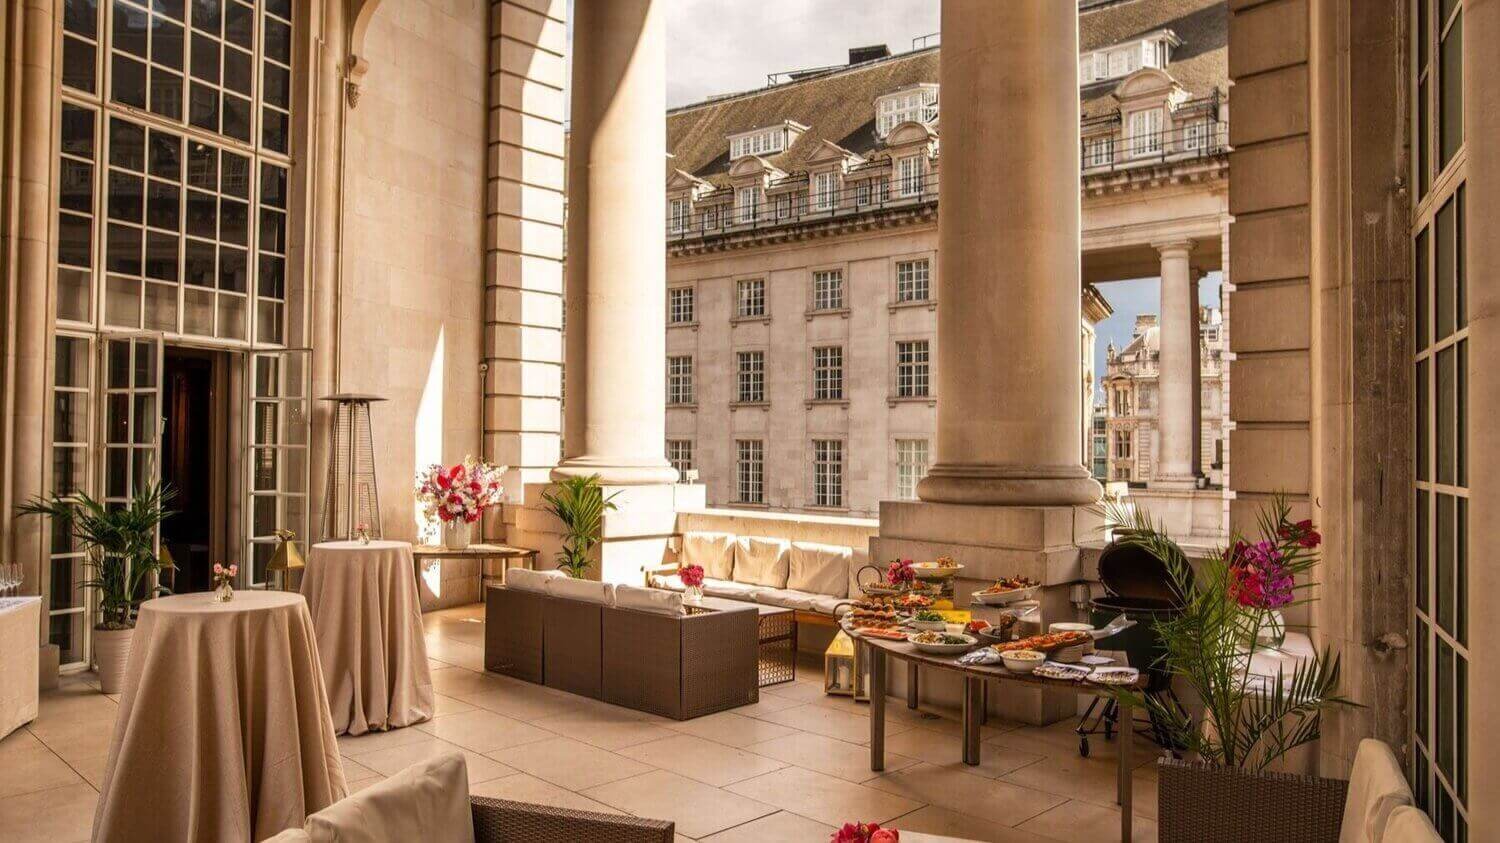 Hotel Café Royal - London - a MICHELIN Guide Hotel